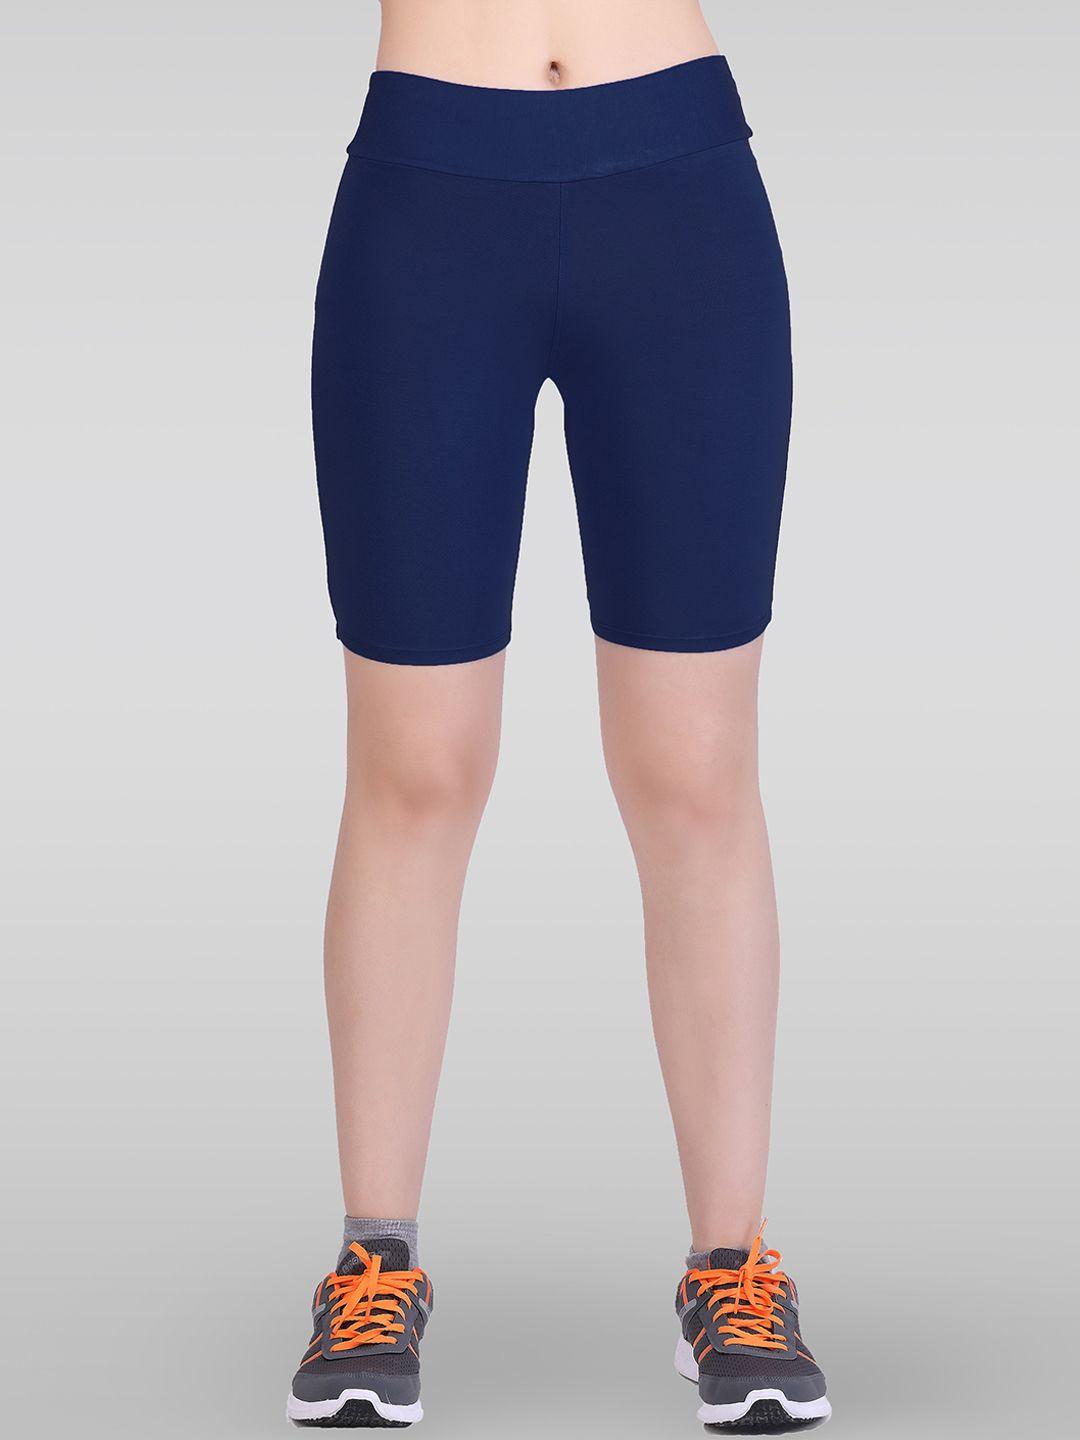 laasa sports women skinny fit cotton yoga shorts